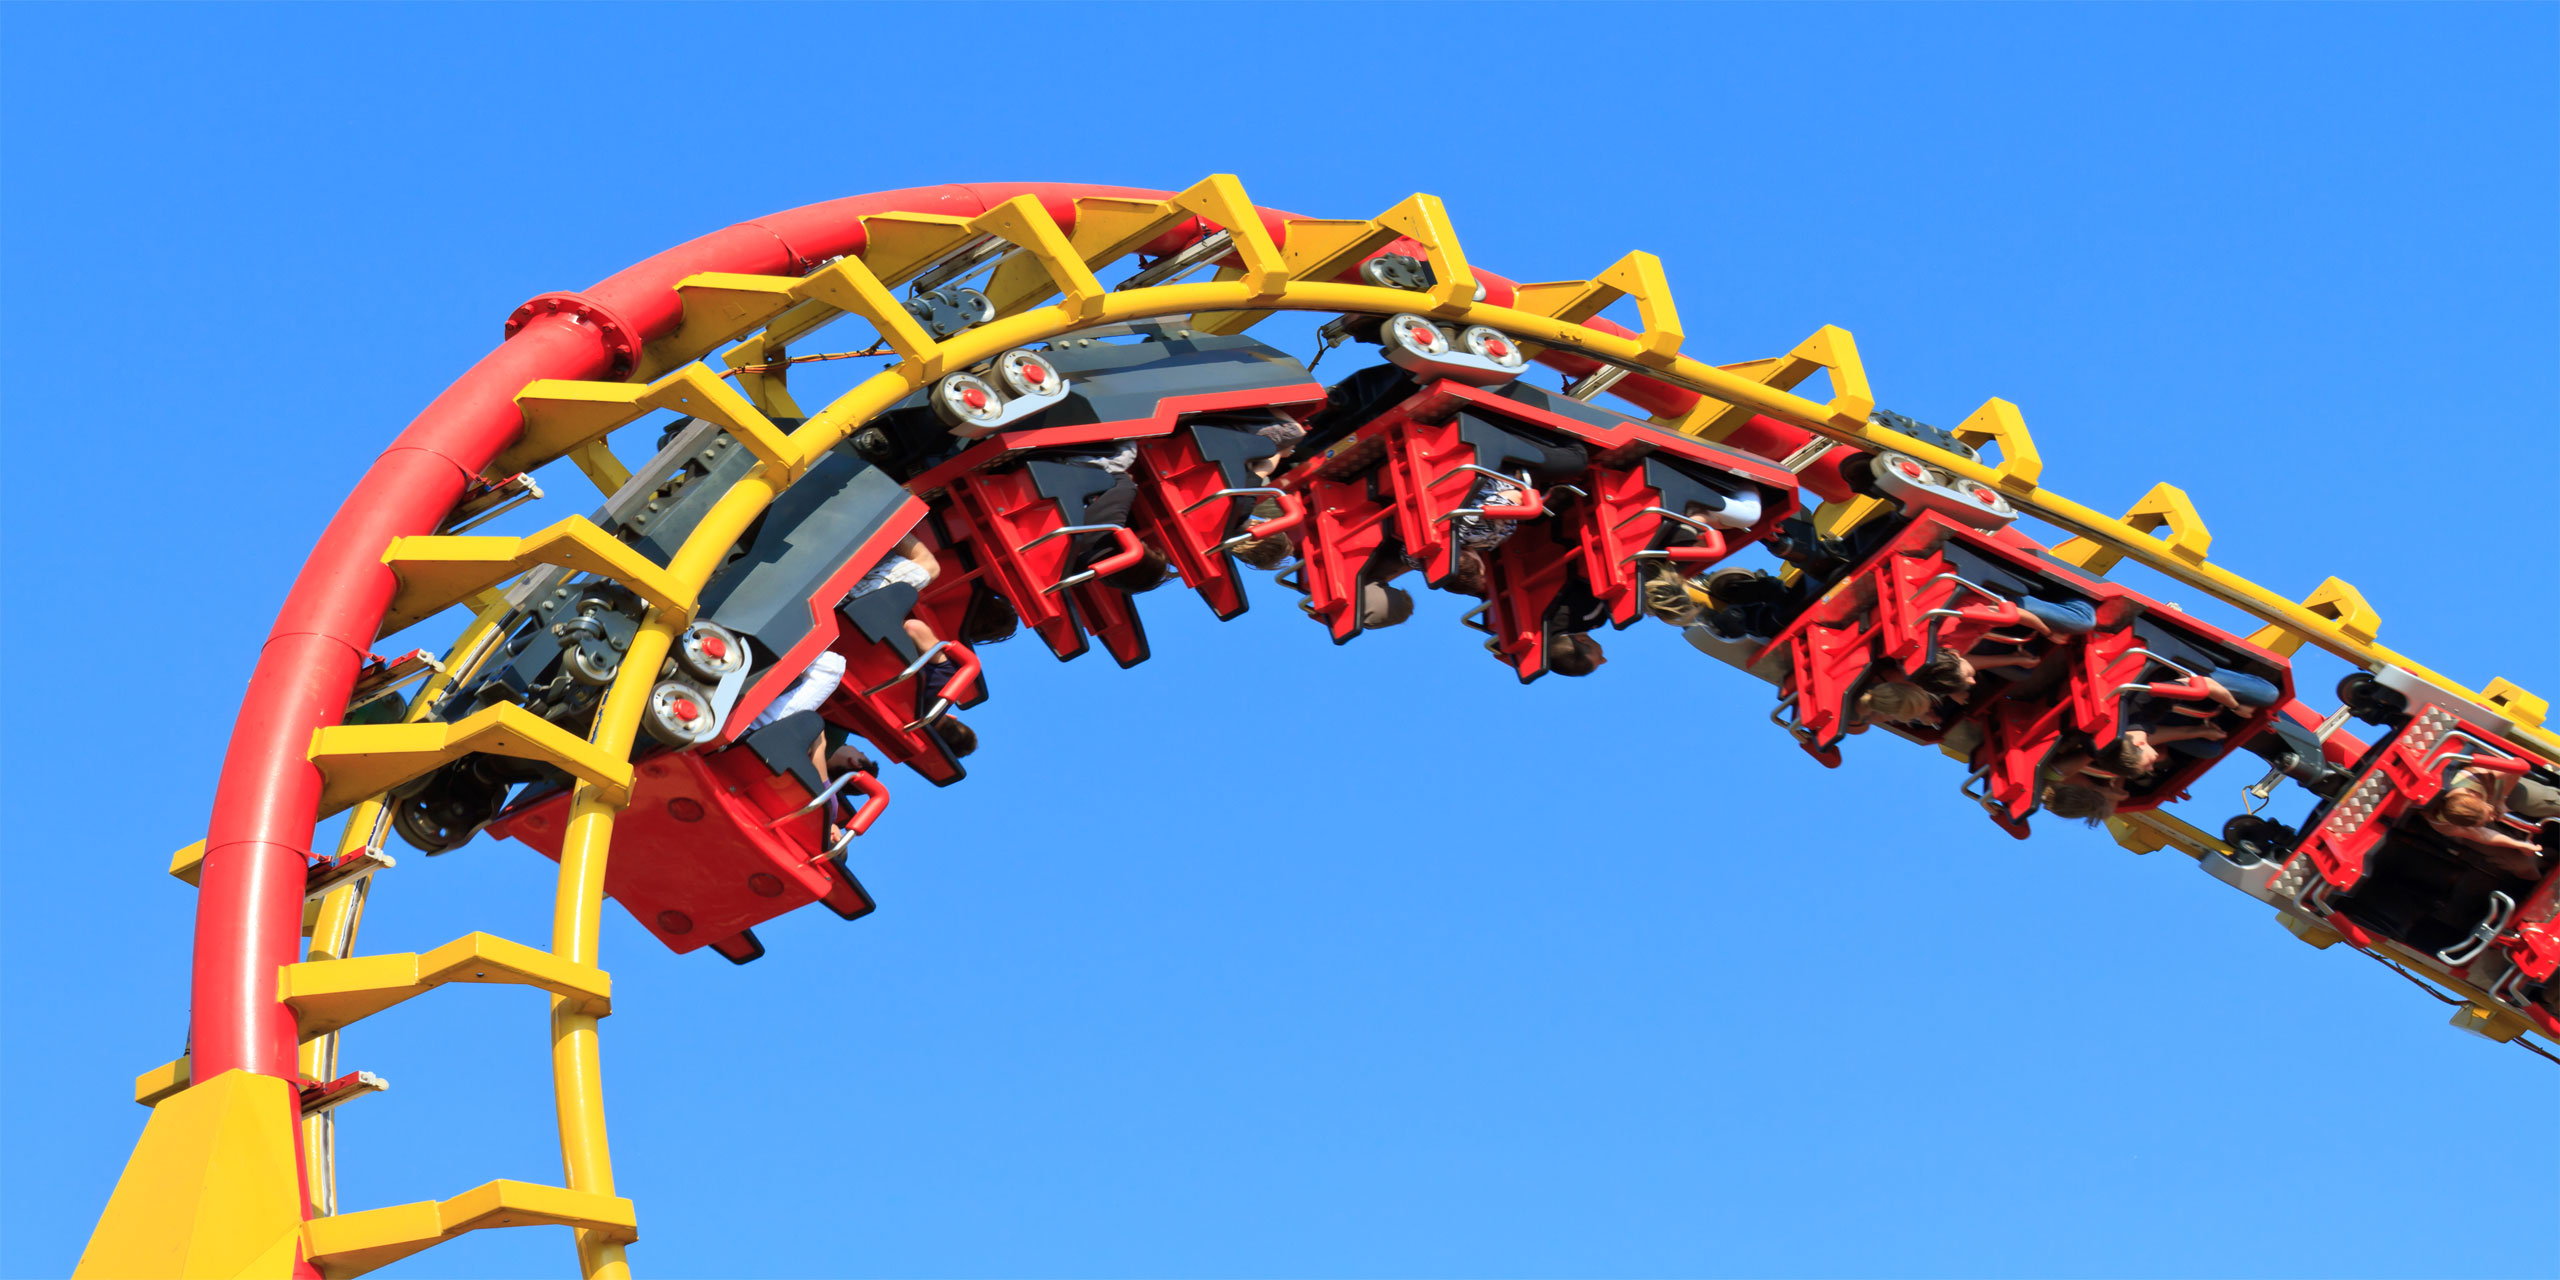 Rollercoaster; Courtesy of Bertl123/Shutterstock.com